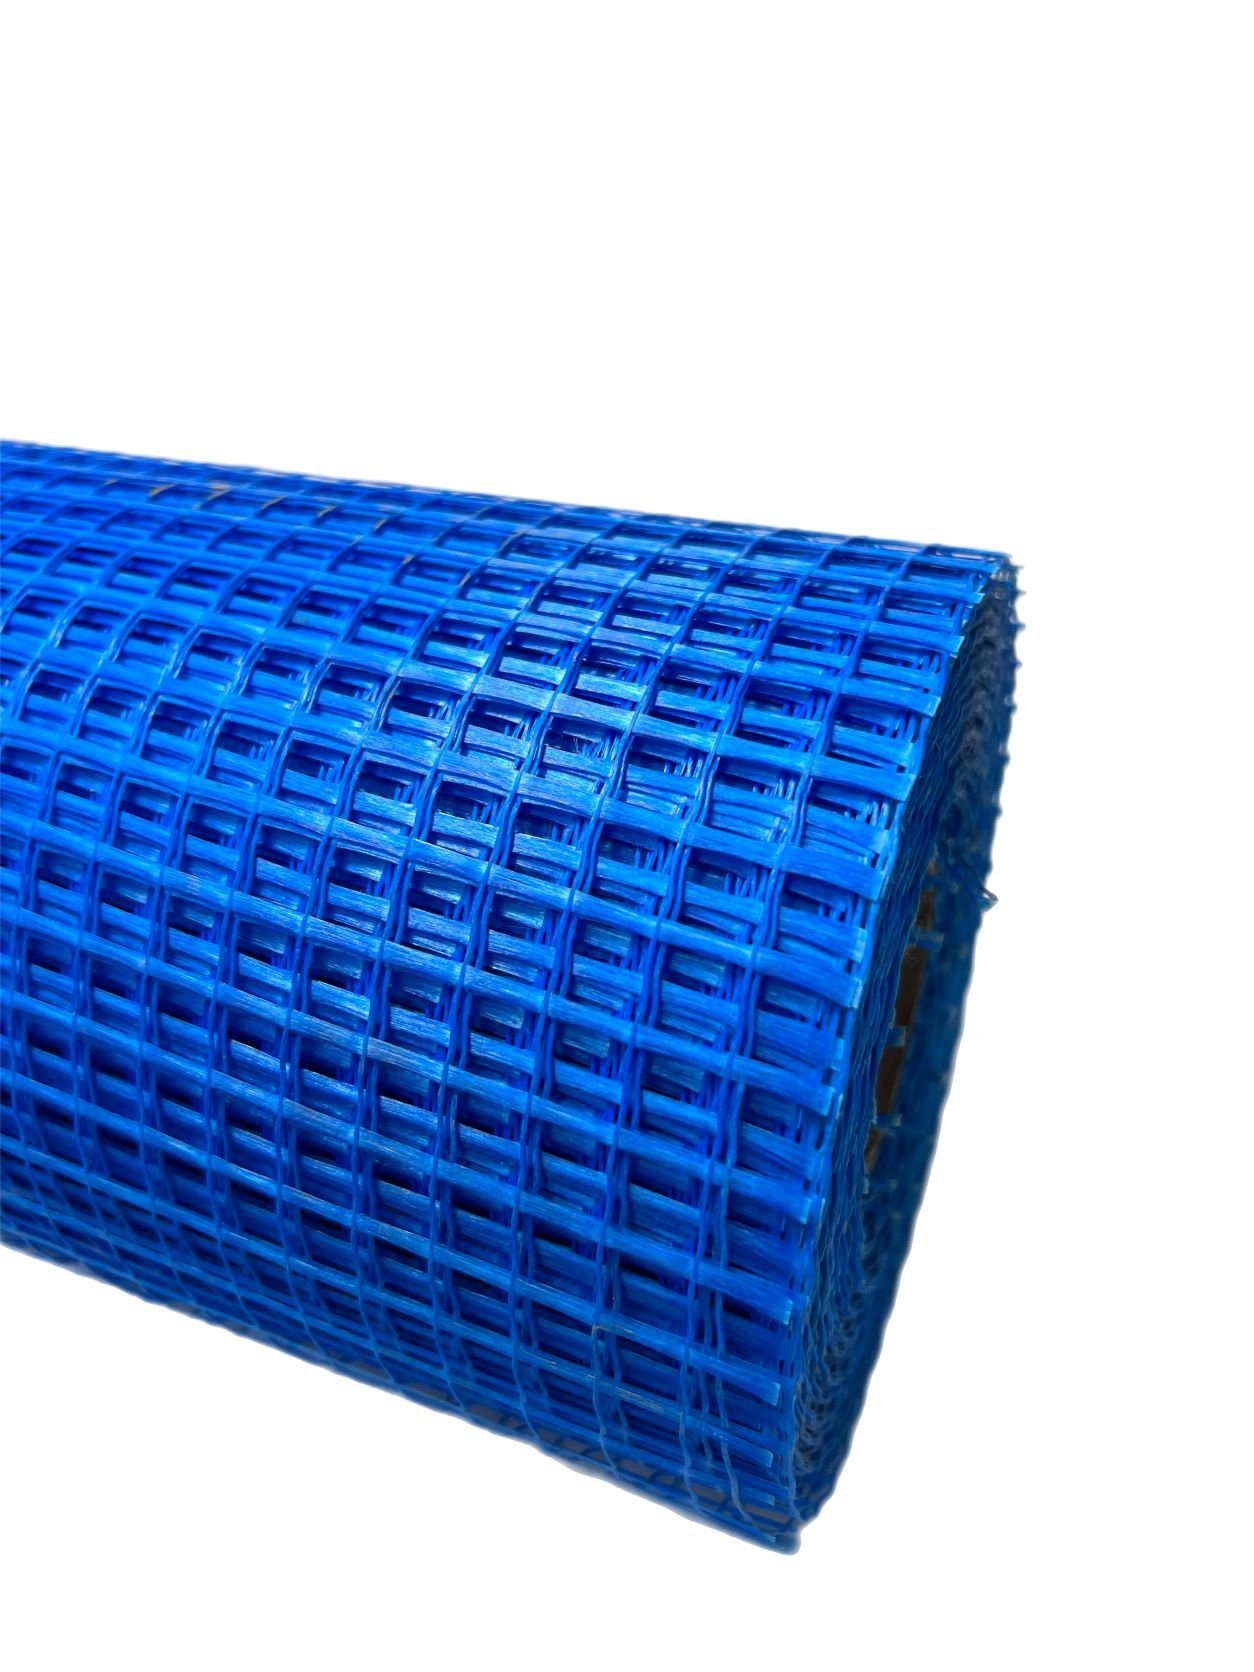 VaGo-Tools Glaswolle Putzgewebe Glasfasergewebe 110g/m² 250m² Blau